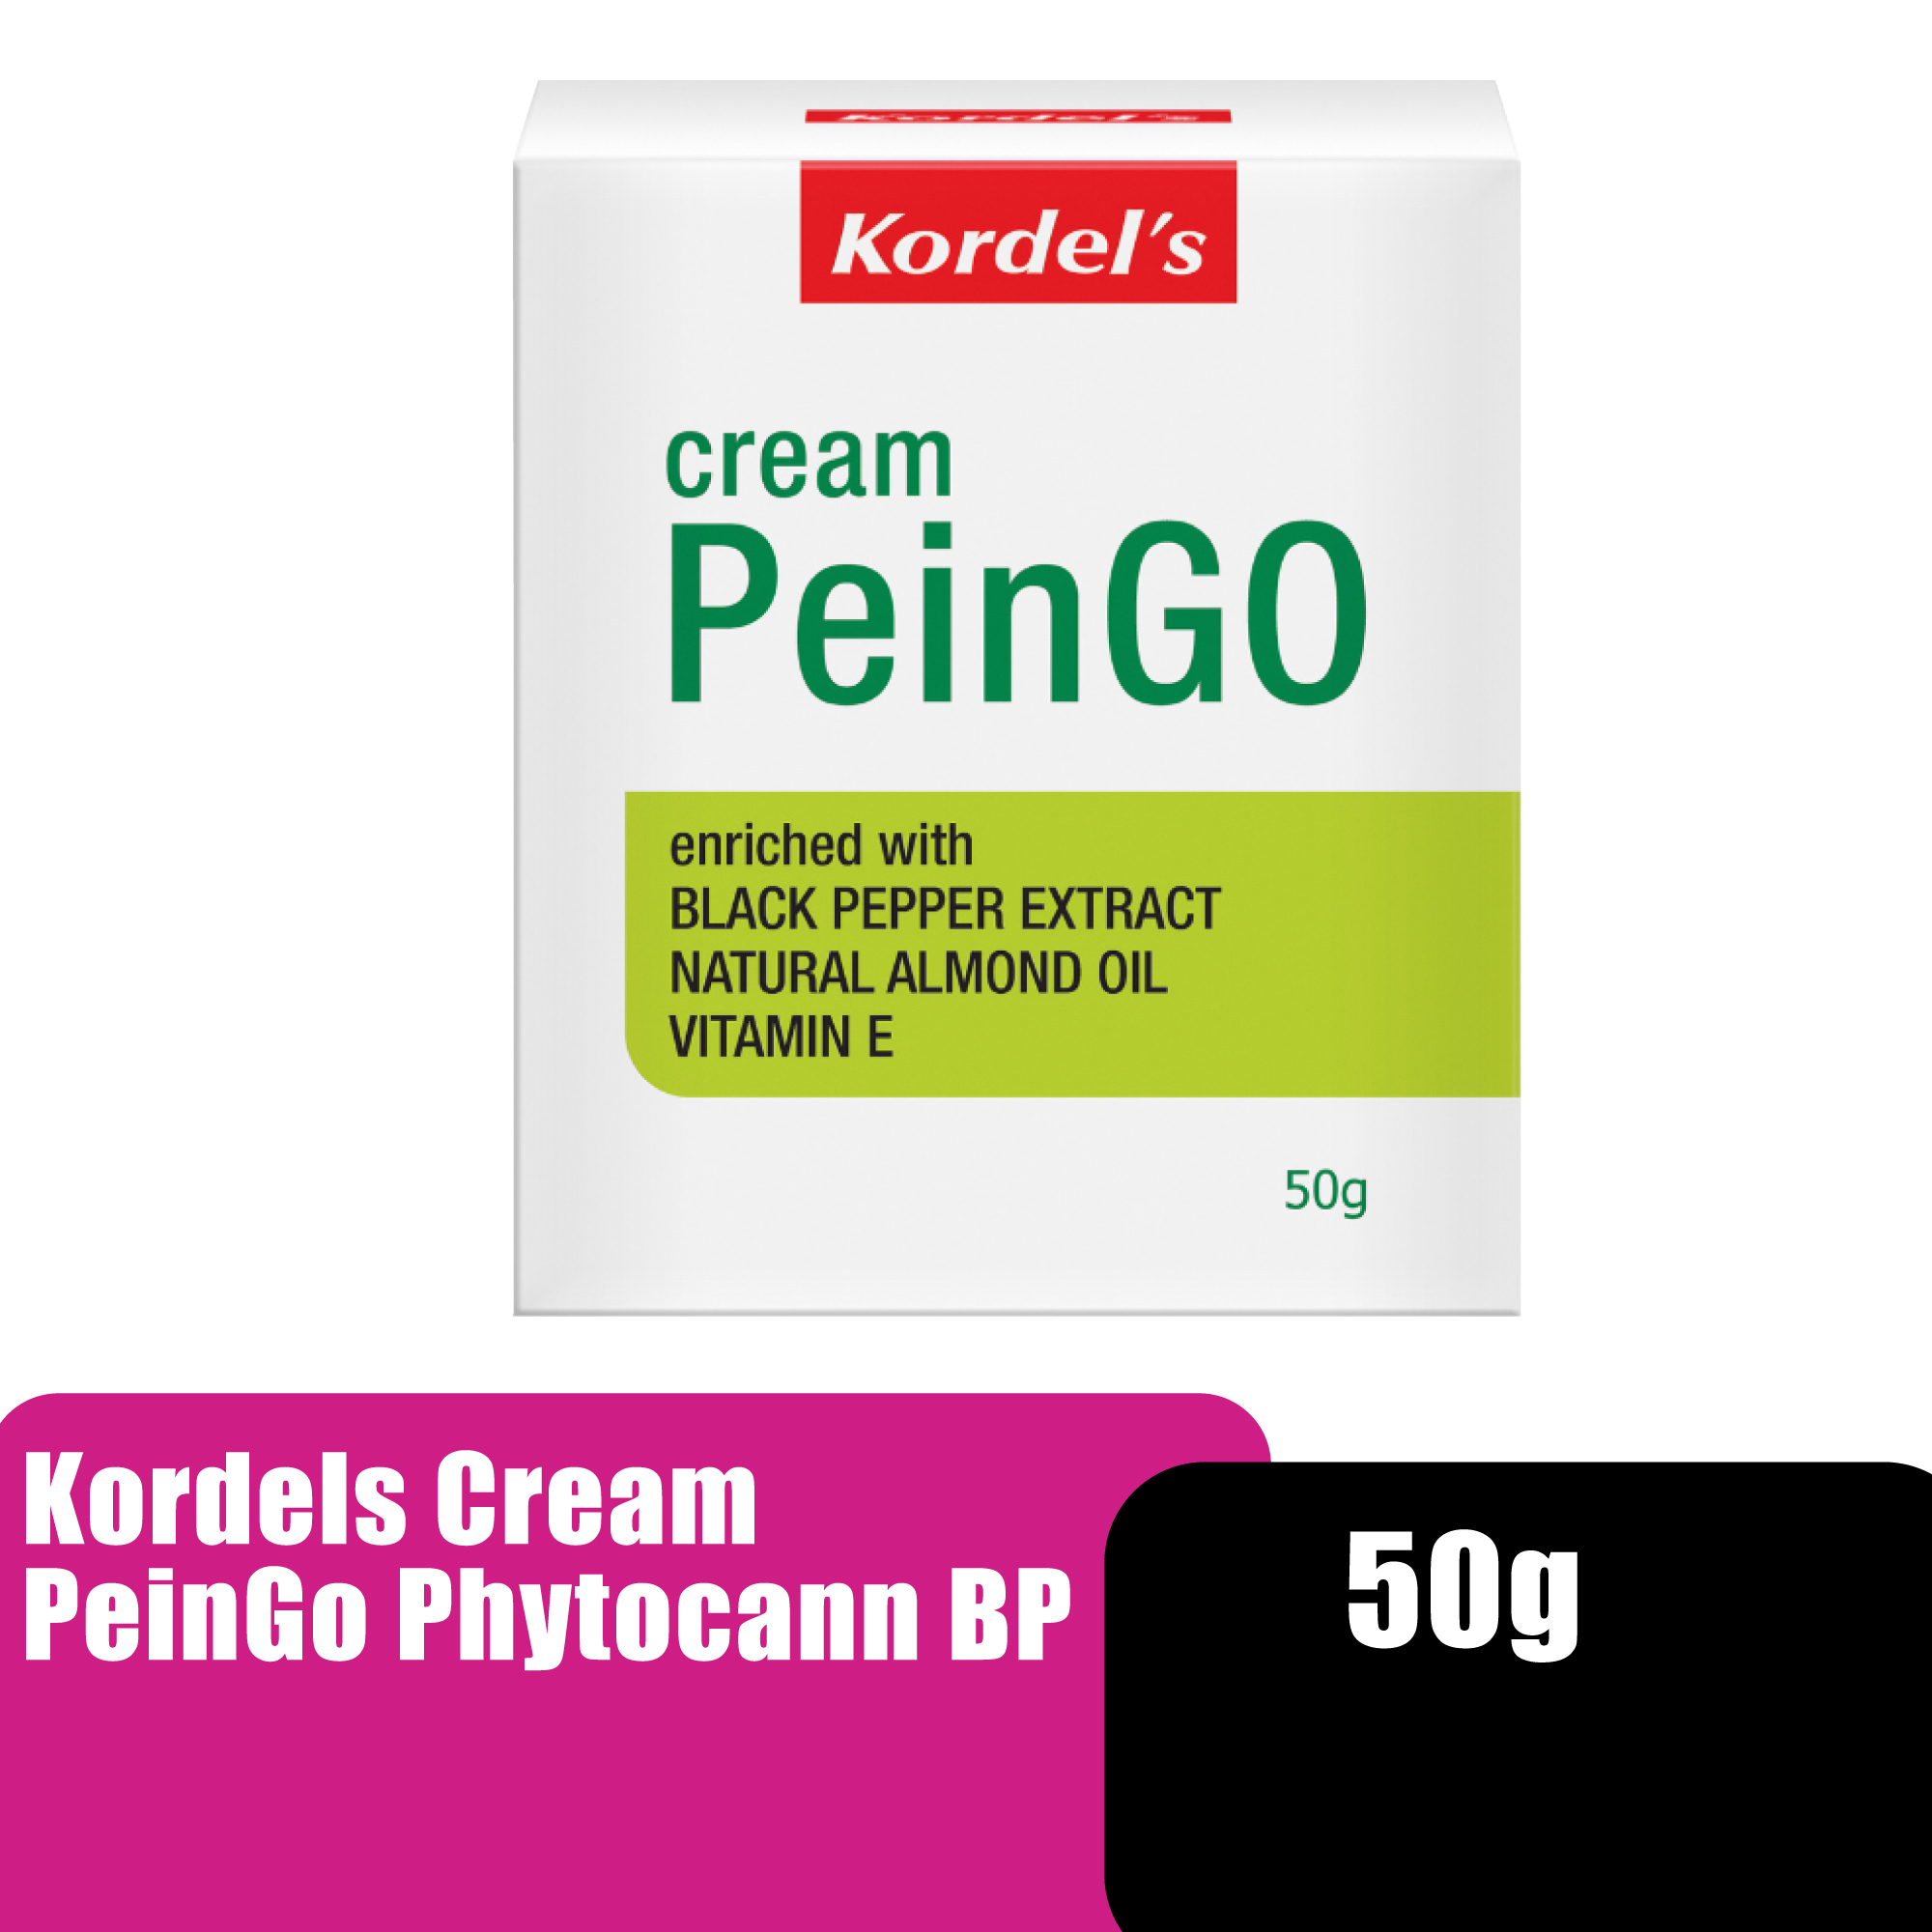 Kordel PeinGO Muscle Cream Phytocann Bp 50g For Counterpain, Jointment Cream (Ubat Sakit Urat, Ubat Saraf Sakit Sendi)